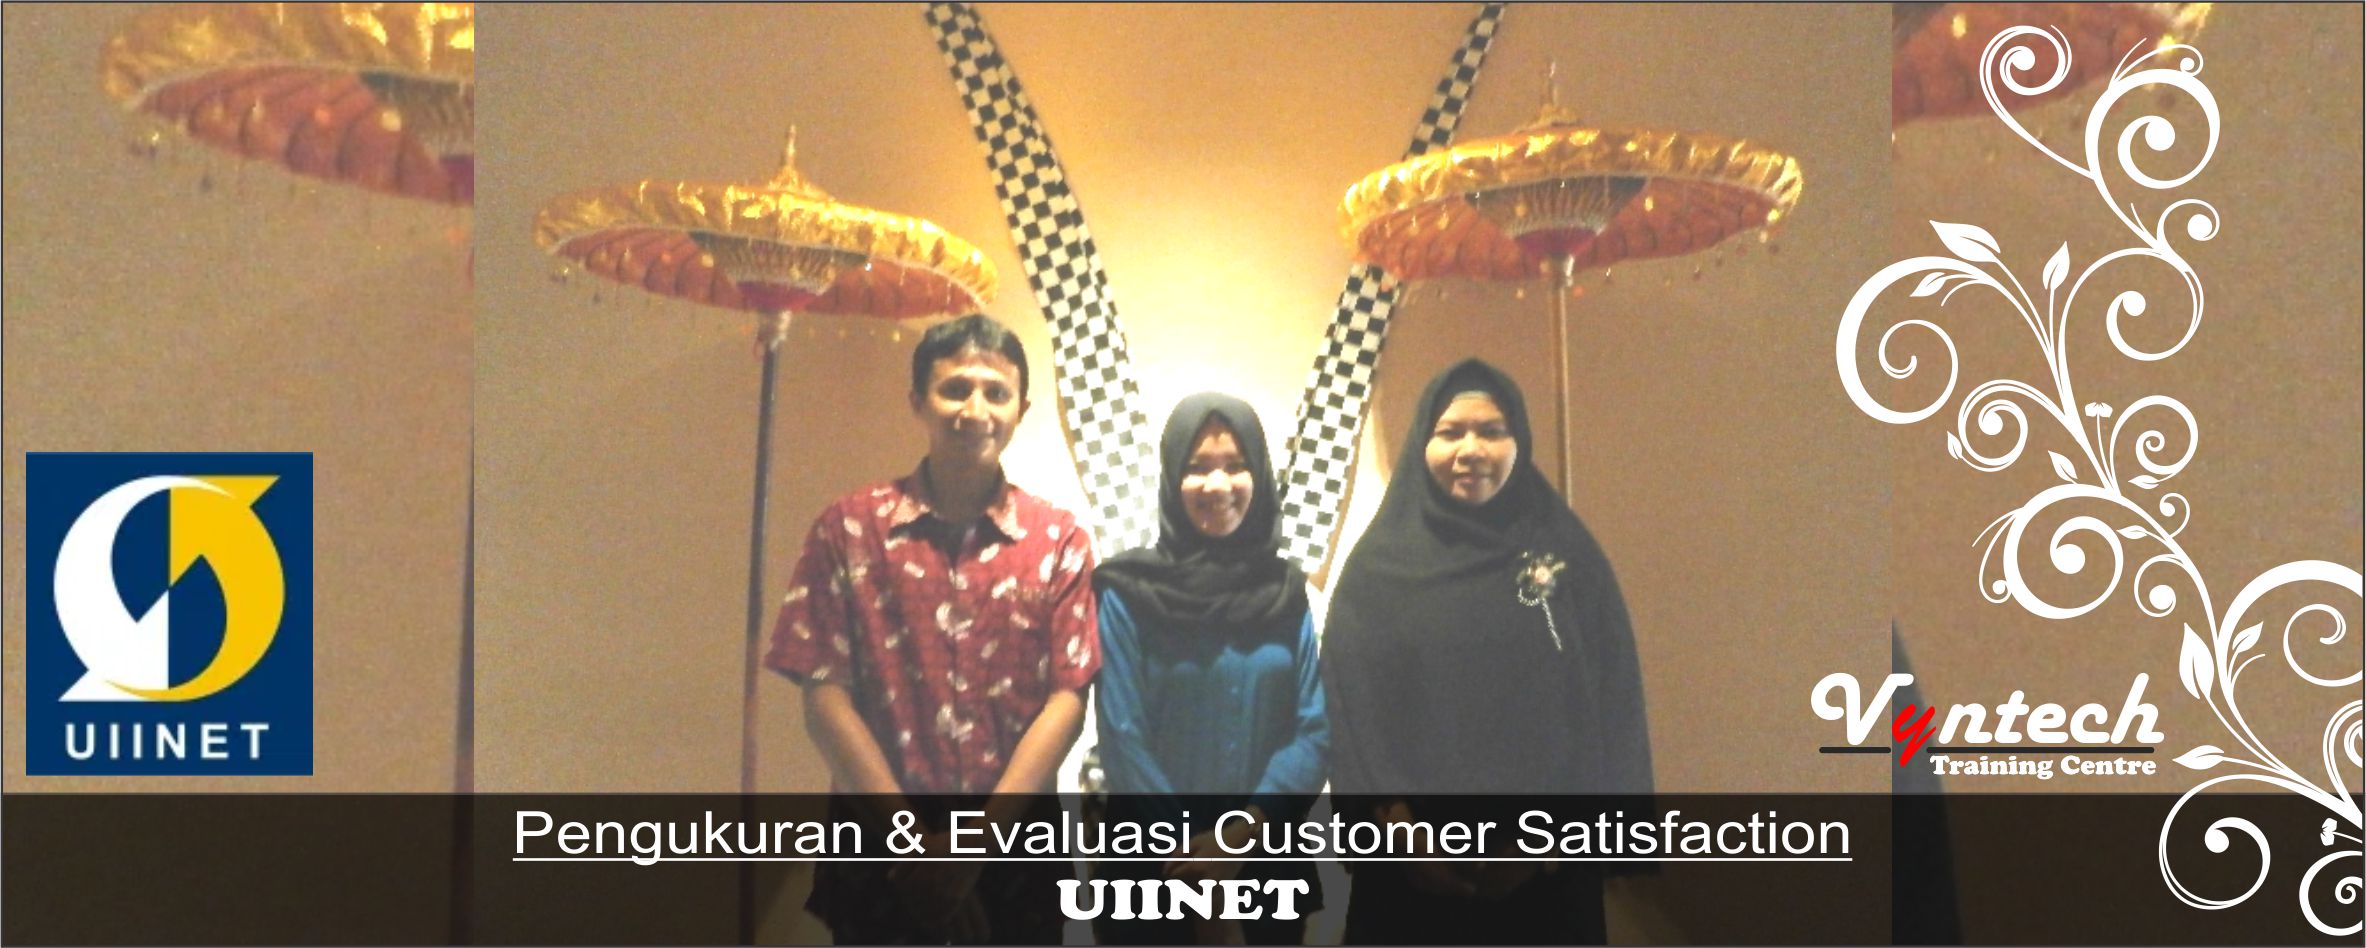 20151019 Training Pengukuran & Evaluasi Customer Satisfaction - UIINET